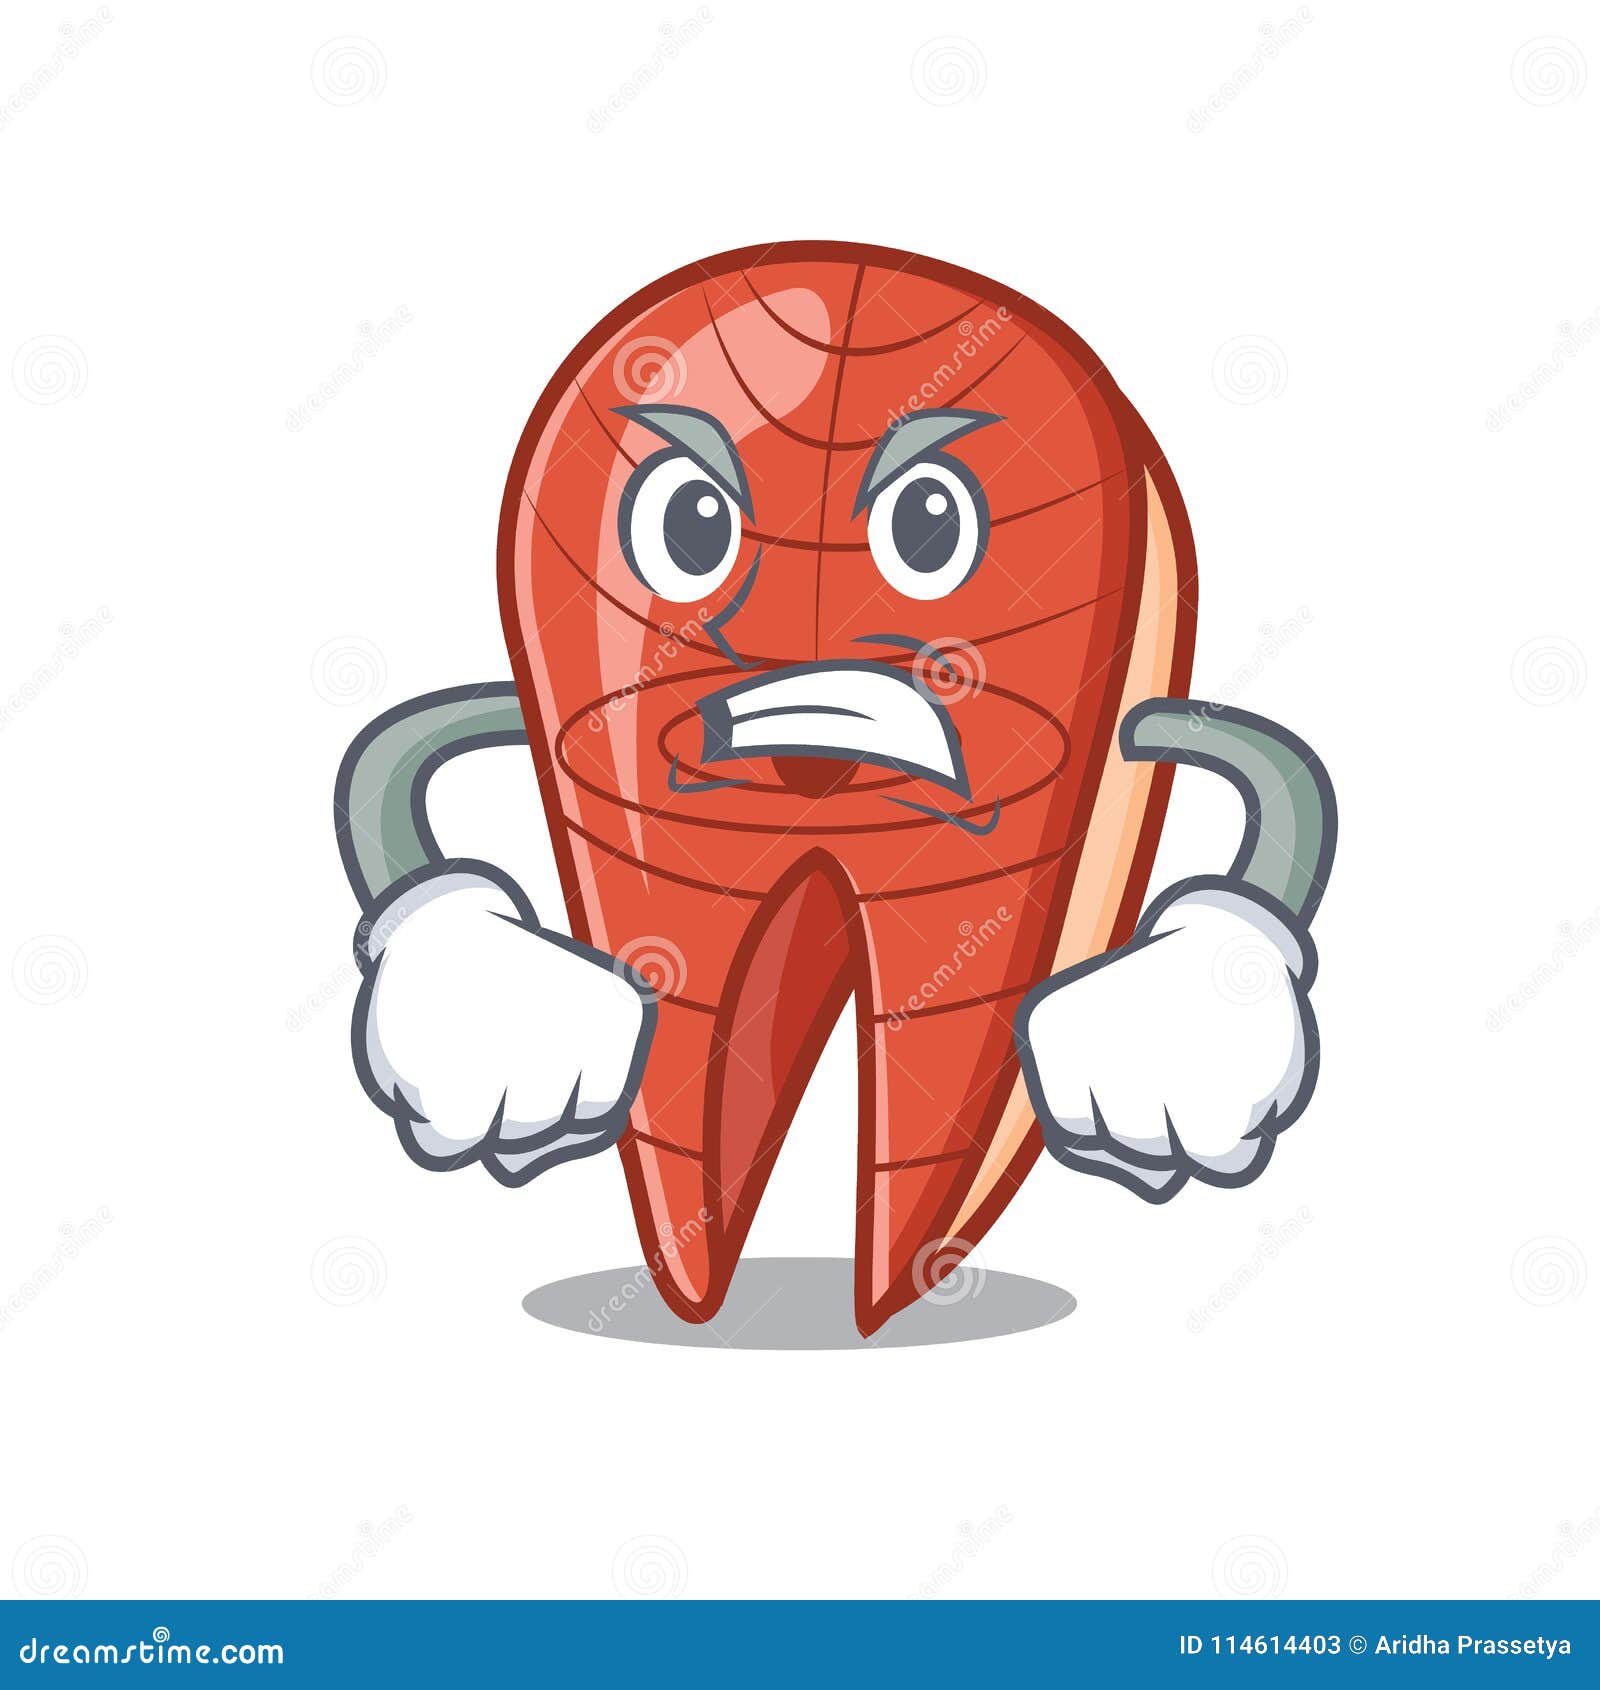 Download Angry Fish Slice Mascot Cartoon Stock Vector ...